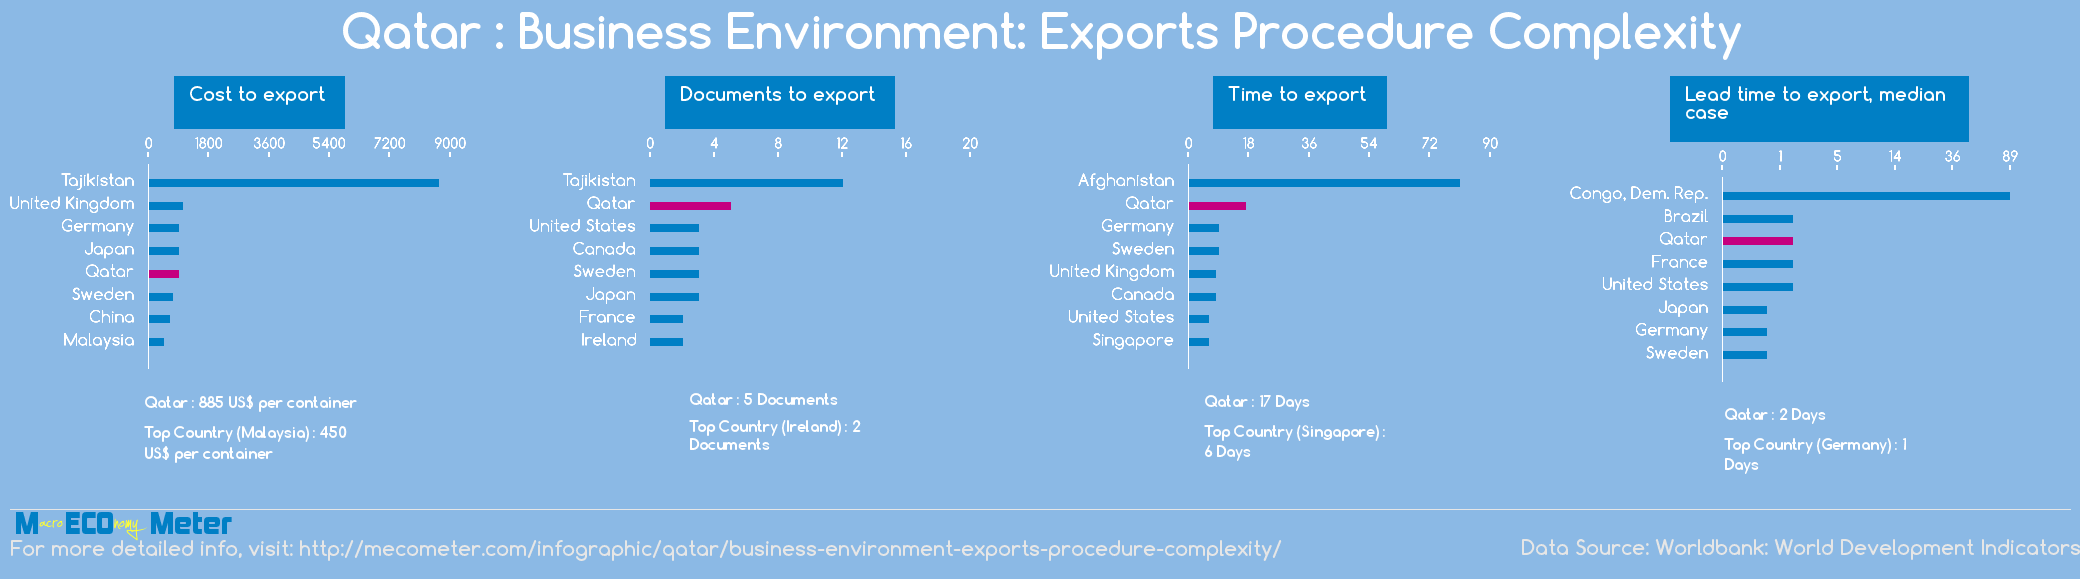 Qatar : Business Environment: Exports Procedure Complexity